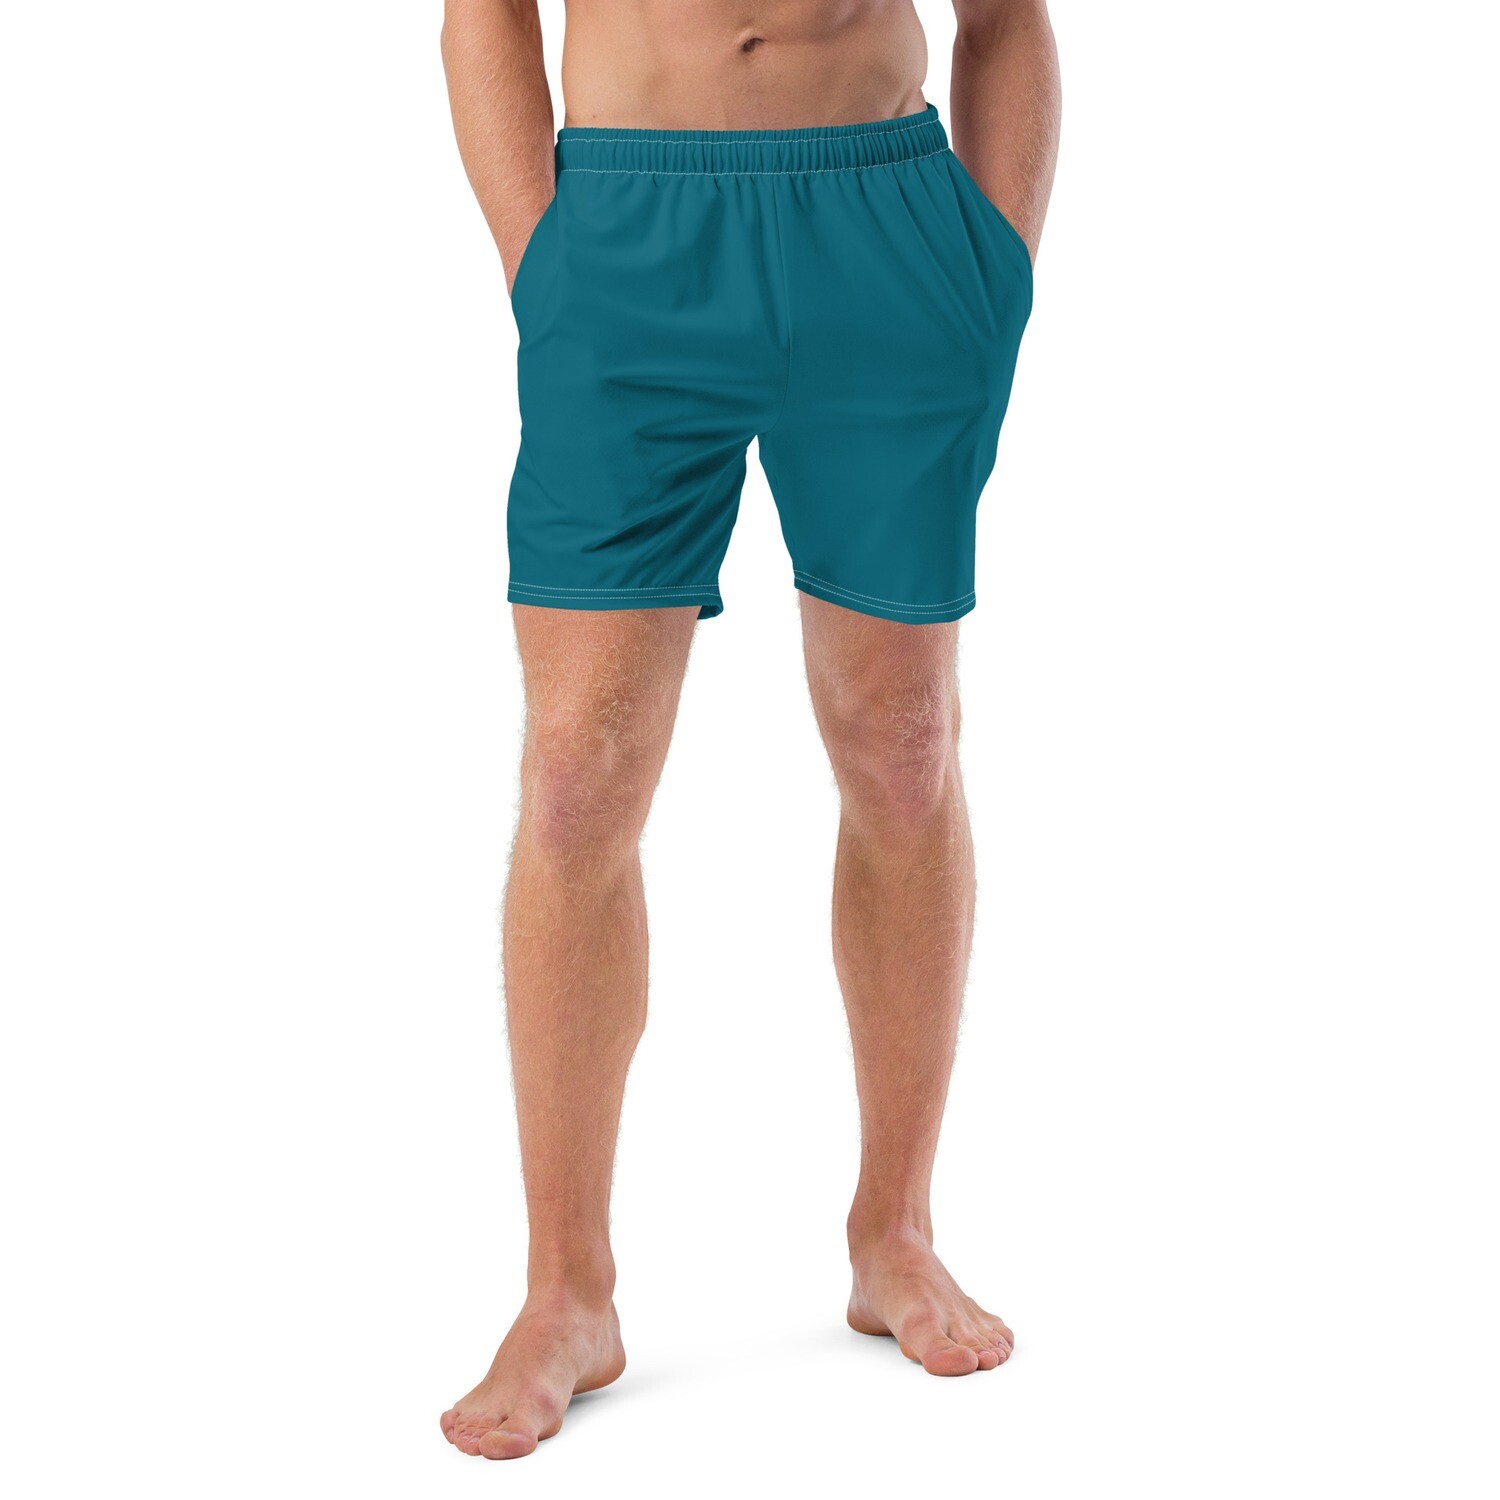 Men's dark retro turquoise swim trunks in sizes 2XS-6XL